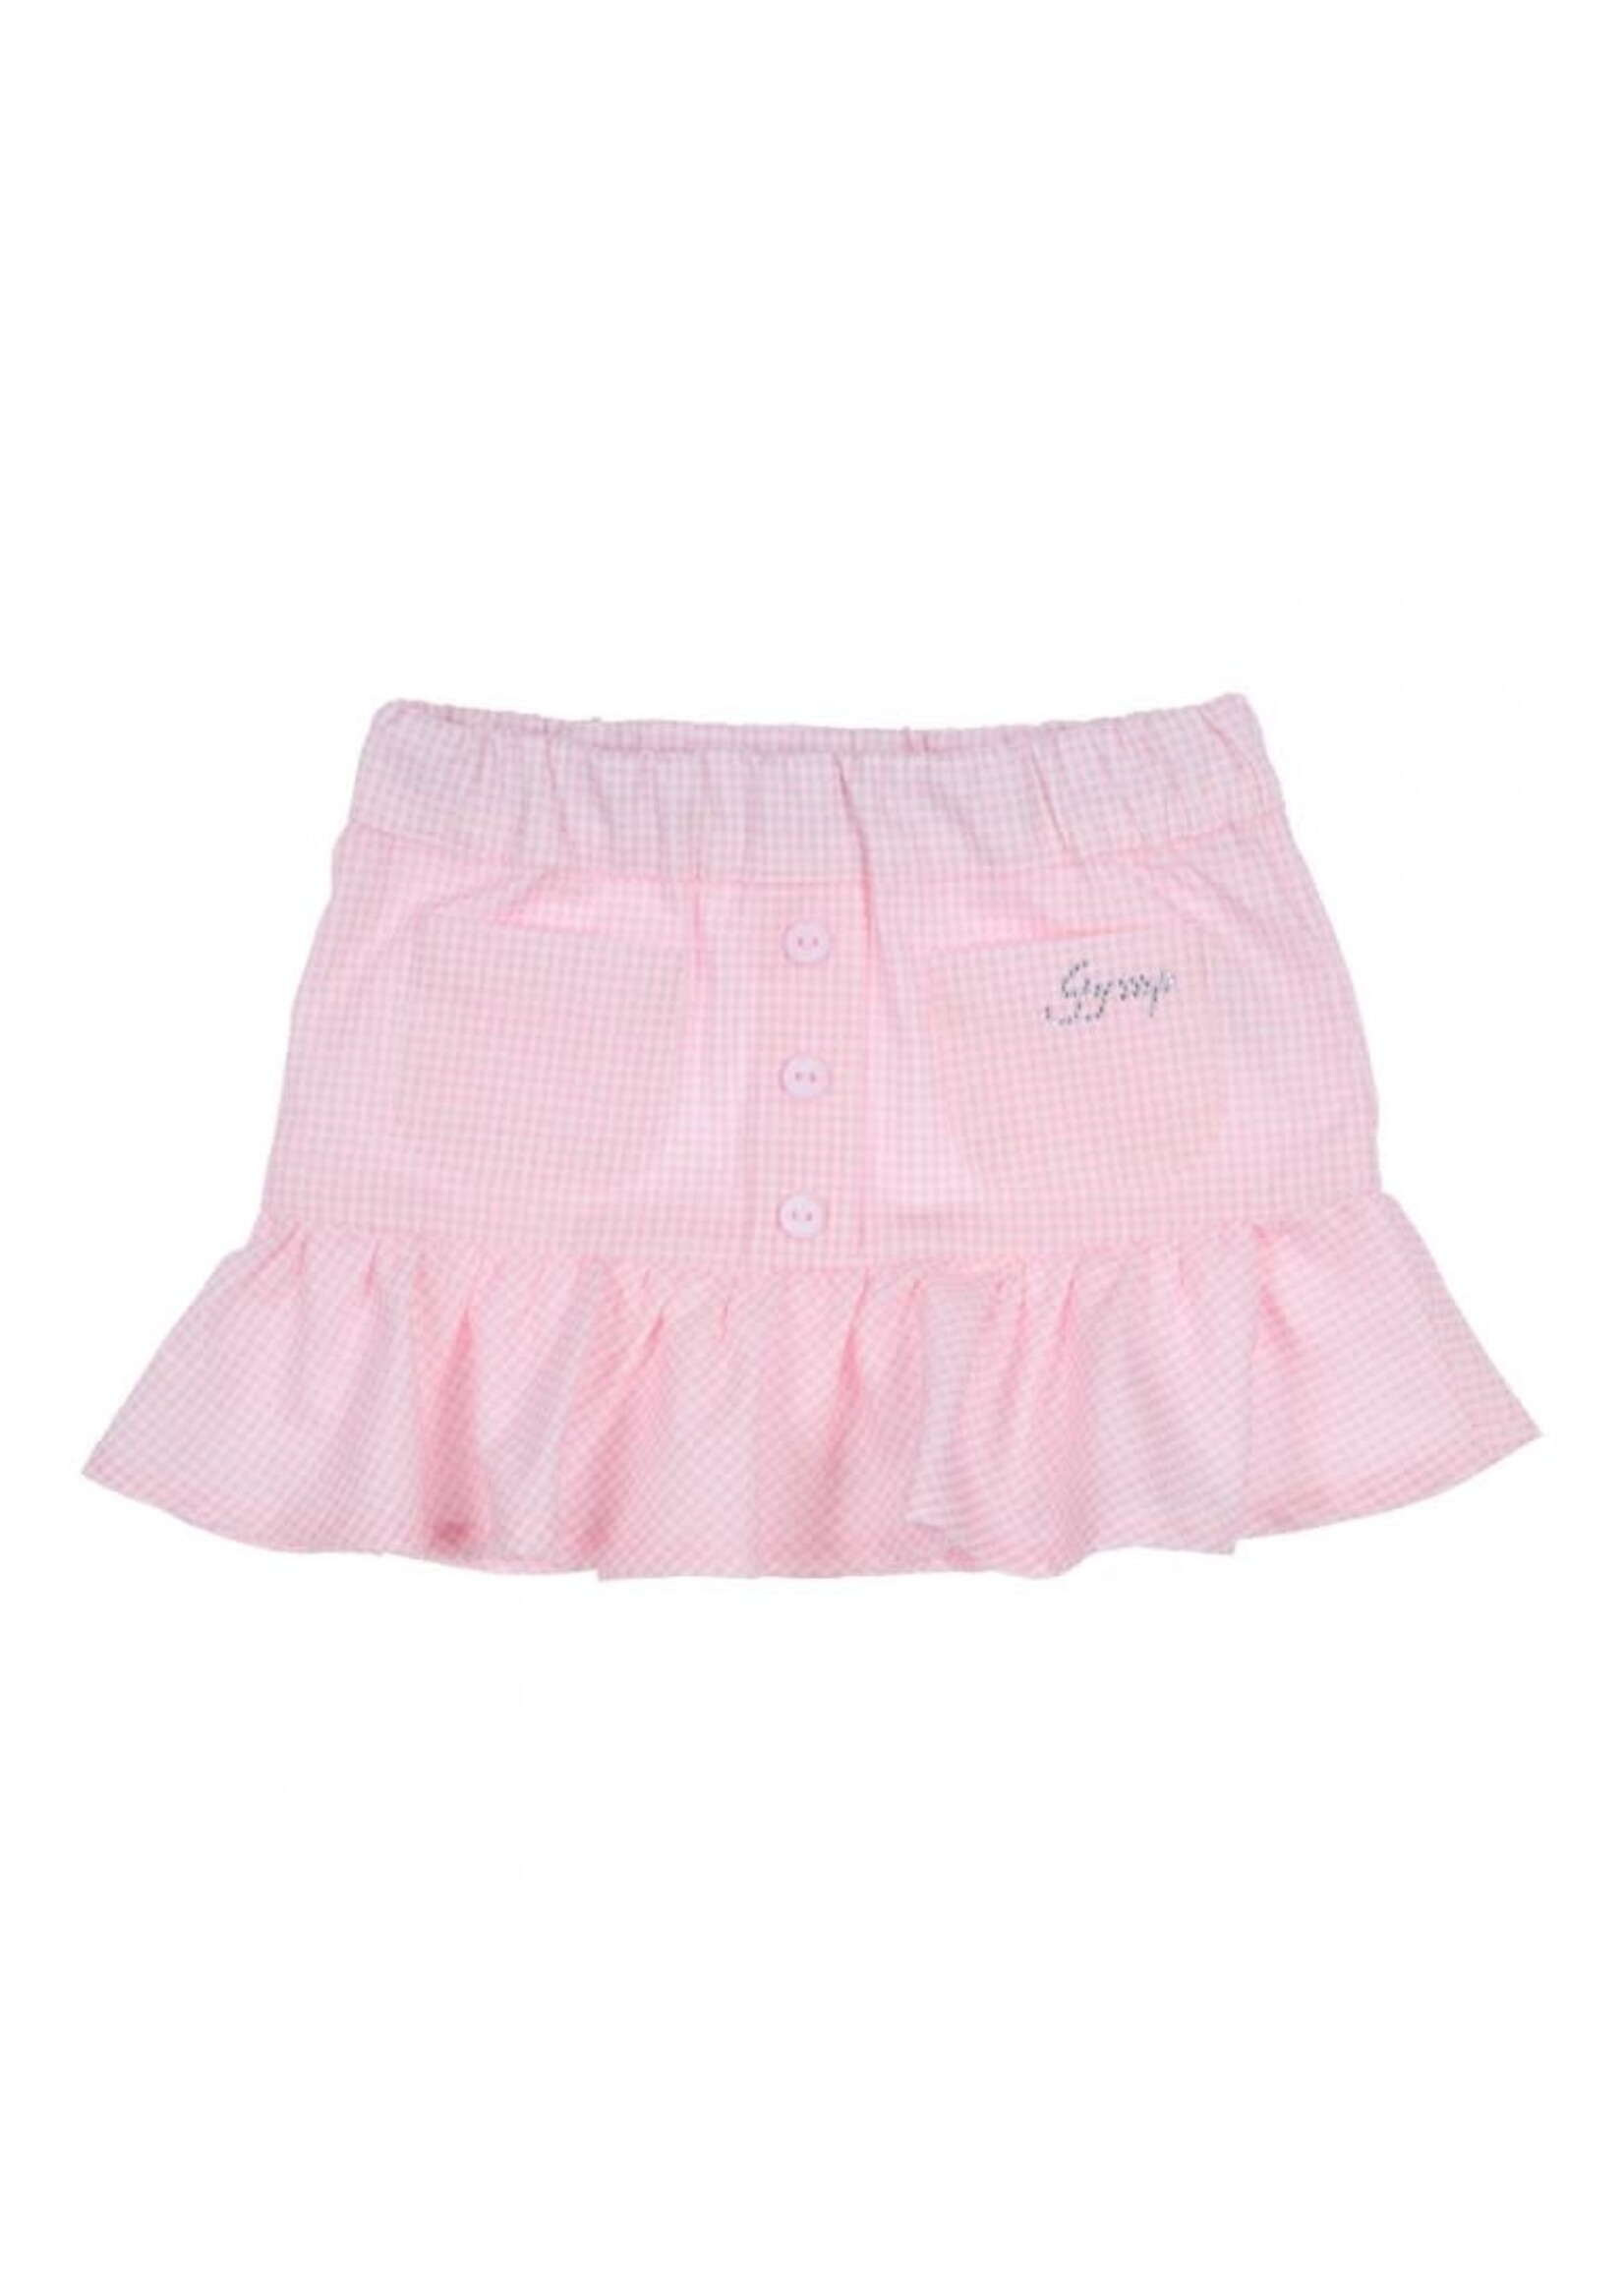 GYMP GYMP Skirt Atosio Light Pink - White 430-4402-10